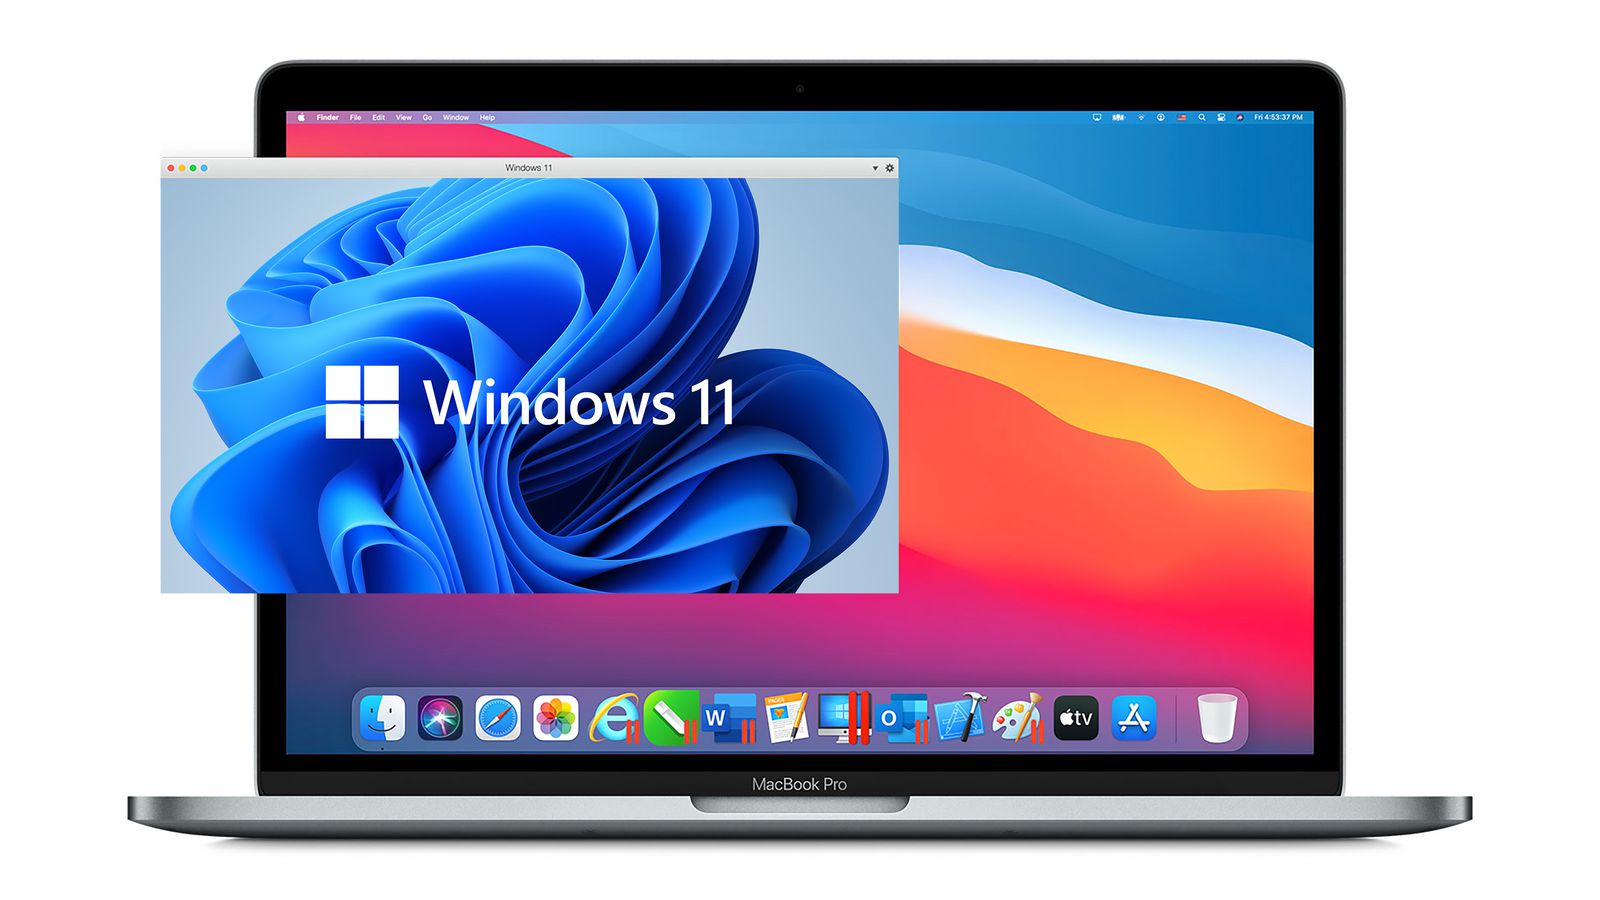 Apple's M1 Pro MacBook Pro is an amazing Windows 11 laptop